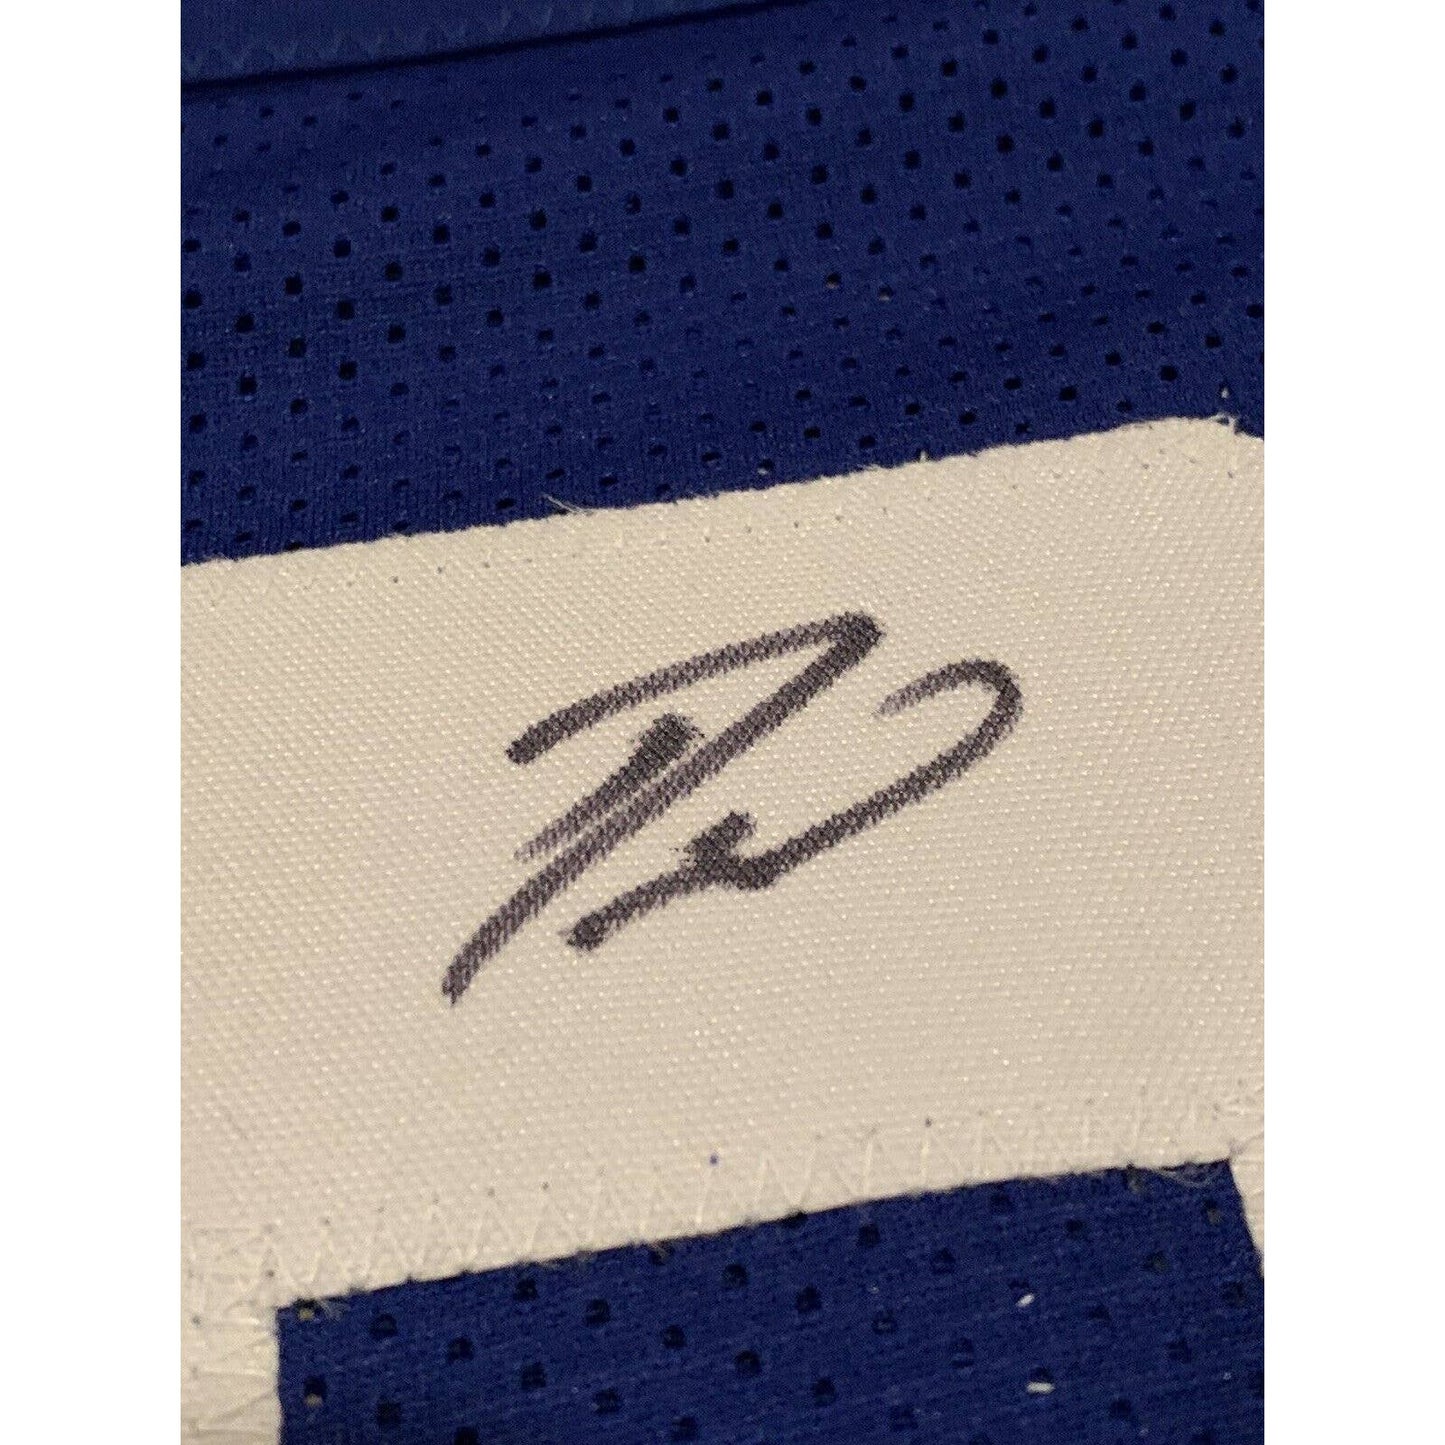 Darius Leonard Autographed/Signed Jersey JSA COA Indianapolis Colts - TreasuresEvolved